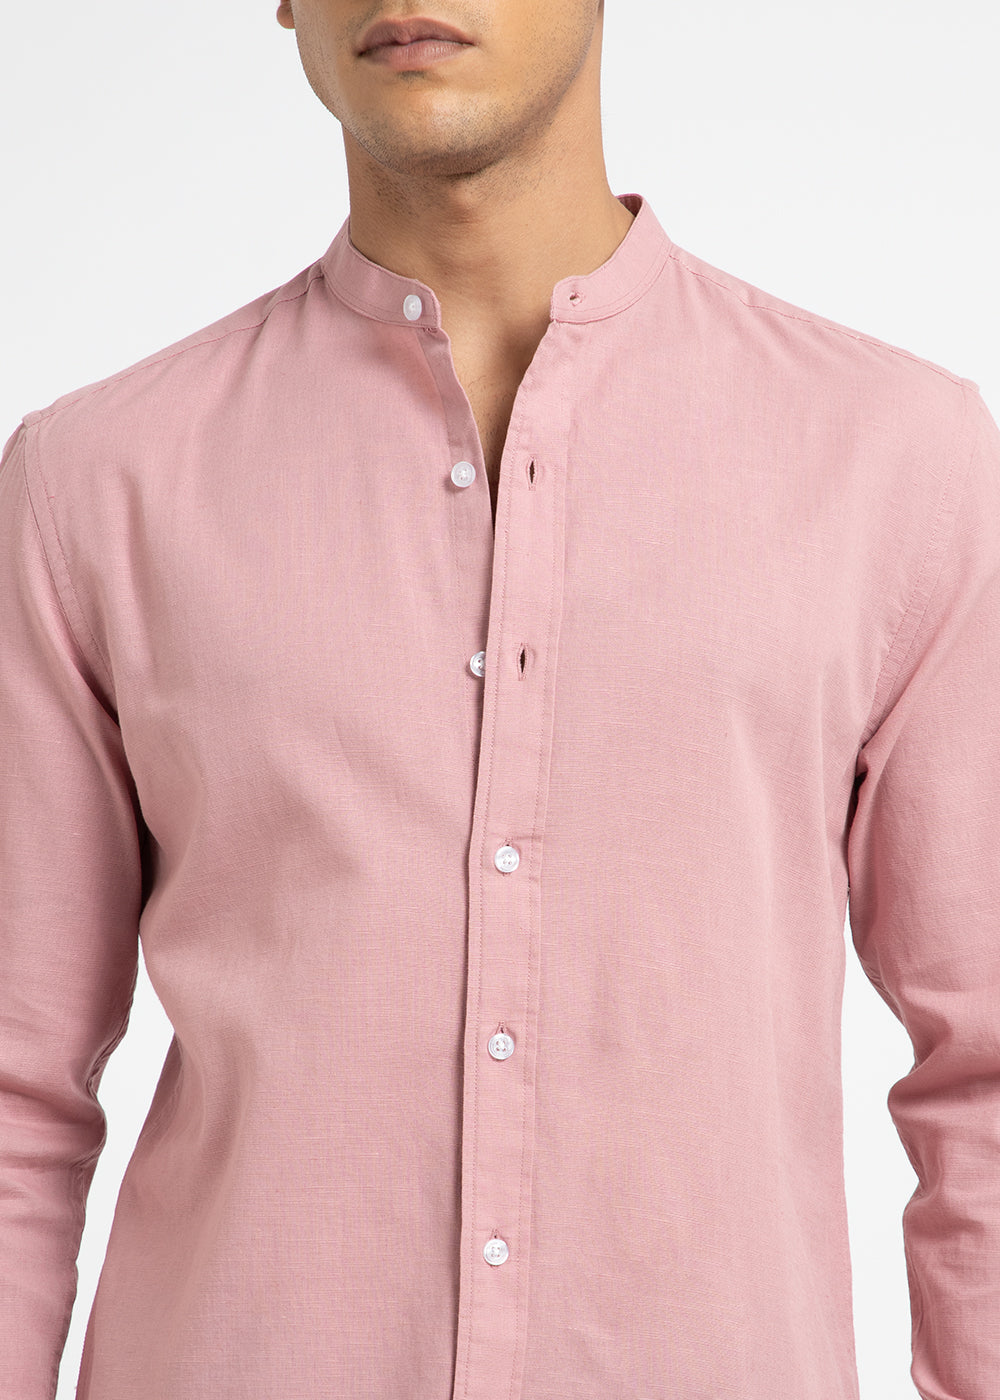 Sakura Pink Cotton Linen Shirt